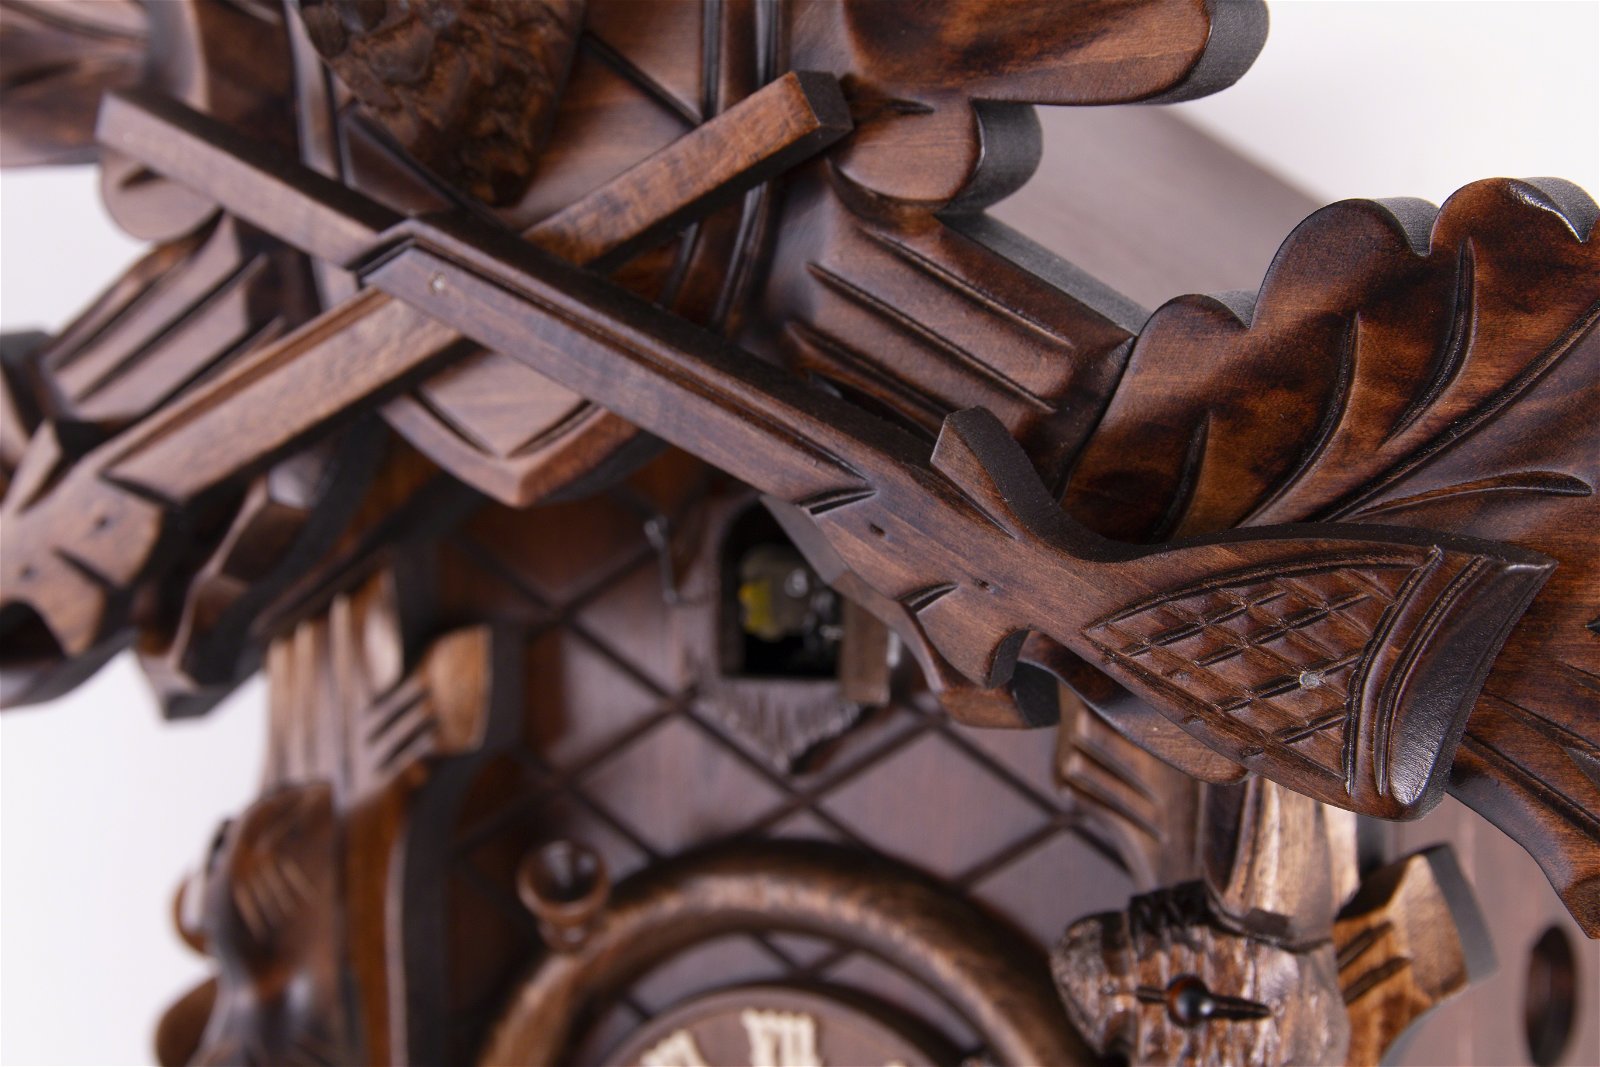 Reloj de cuco estilo “Madera tallada” movimiento mecánico de 8 días 48cm de Anton Schneider